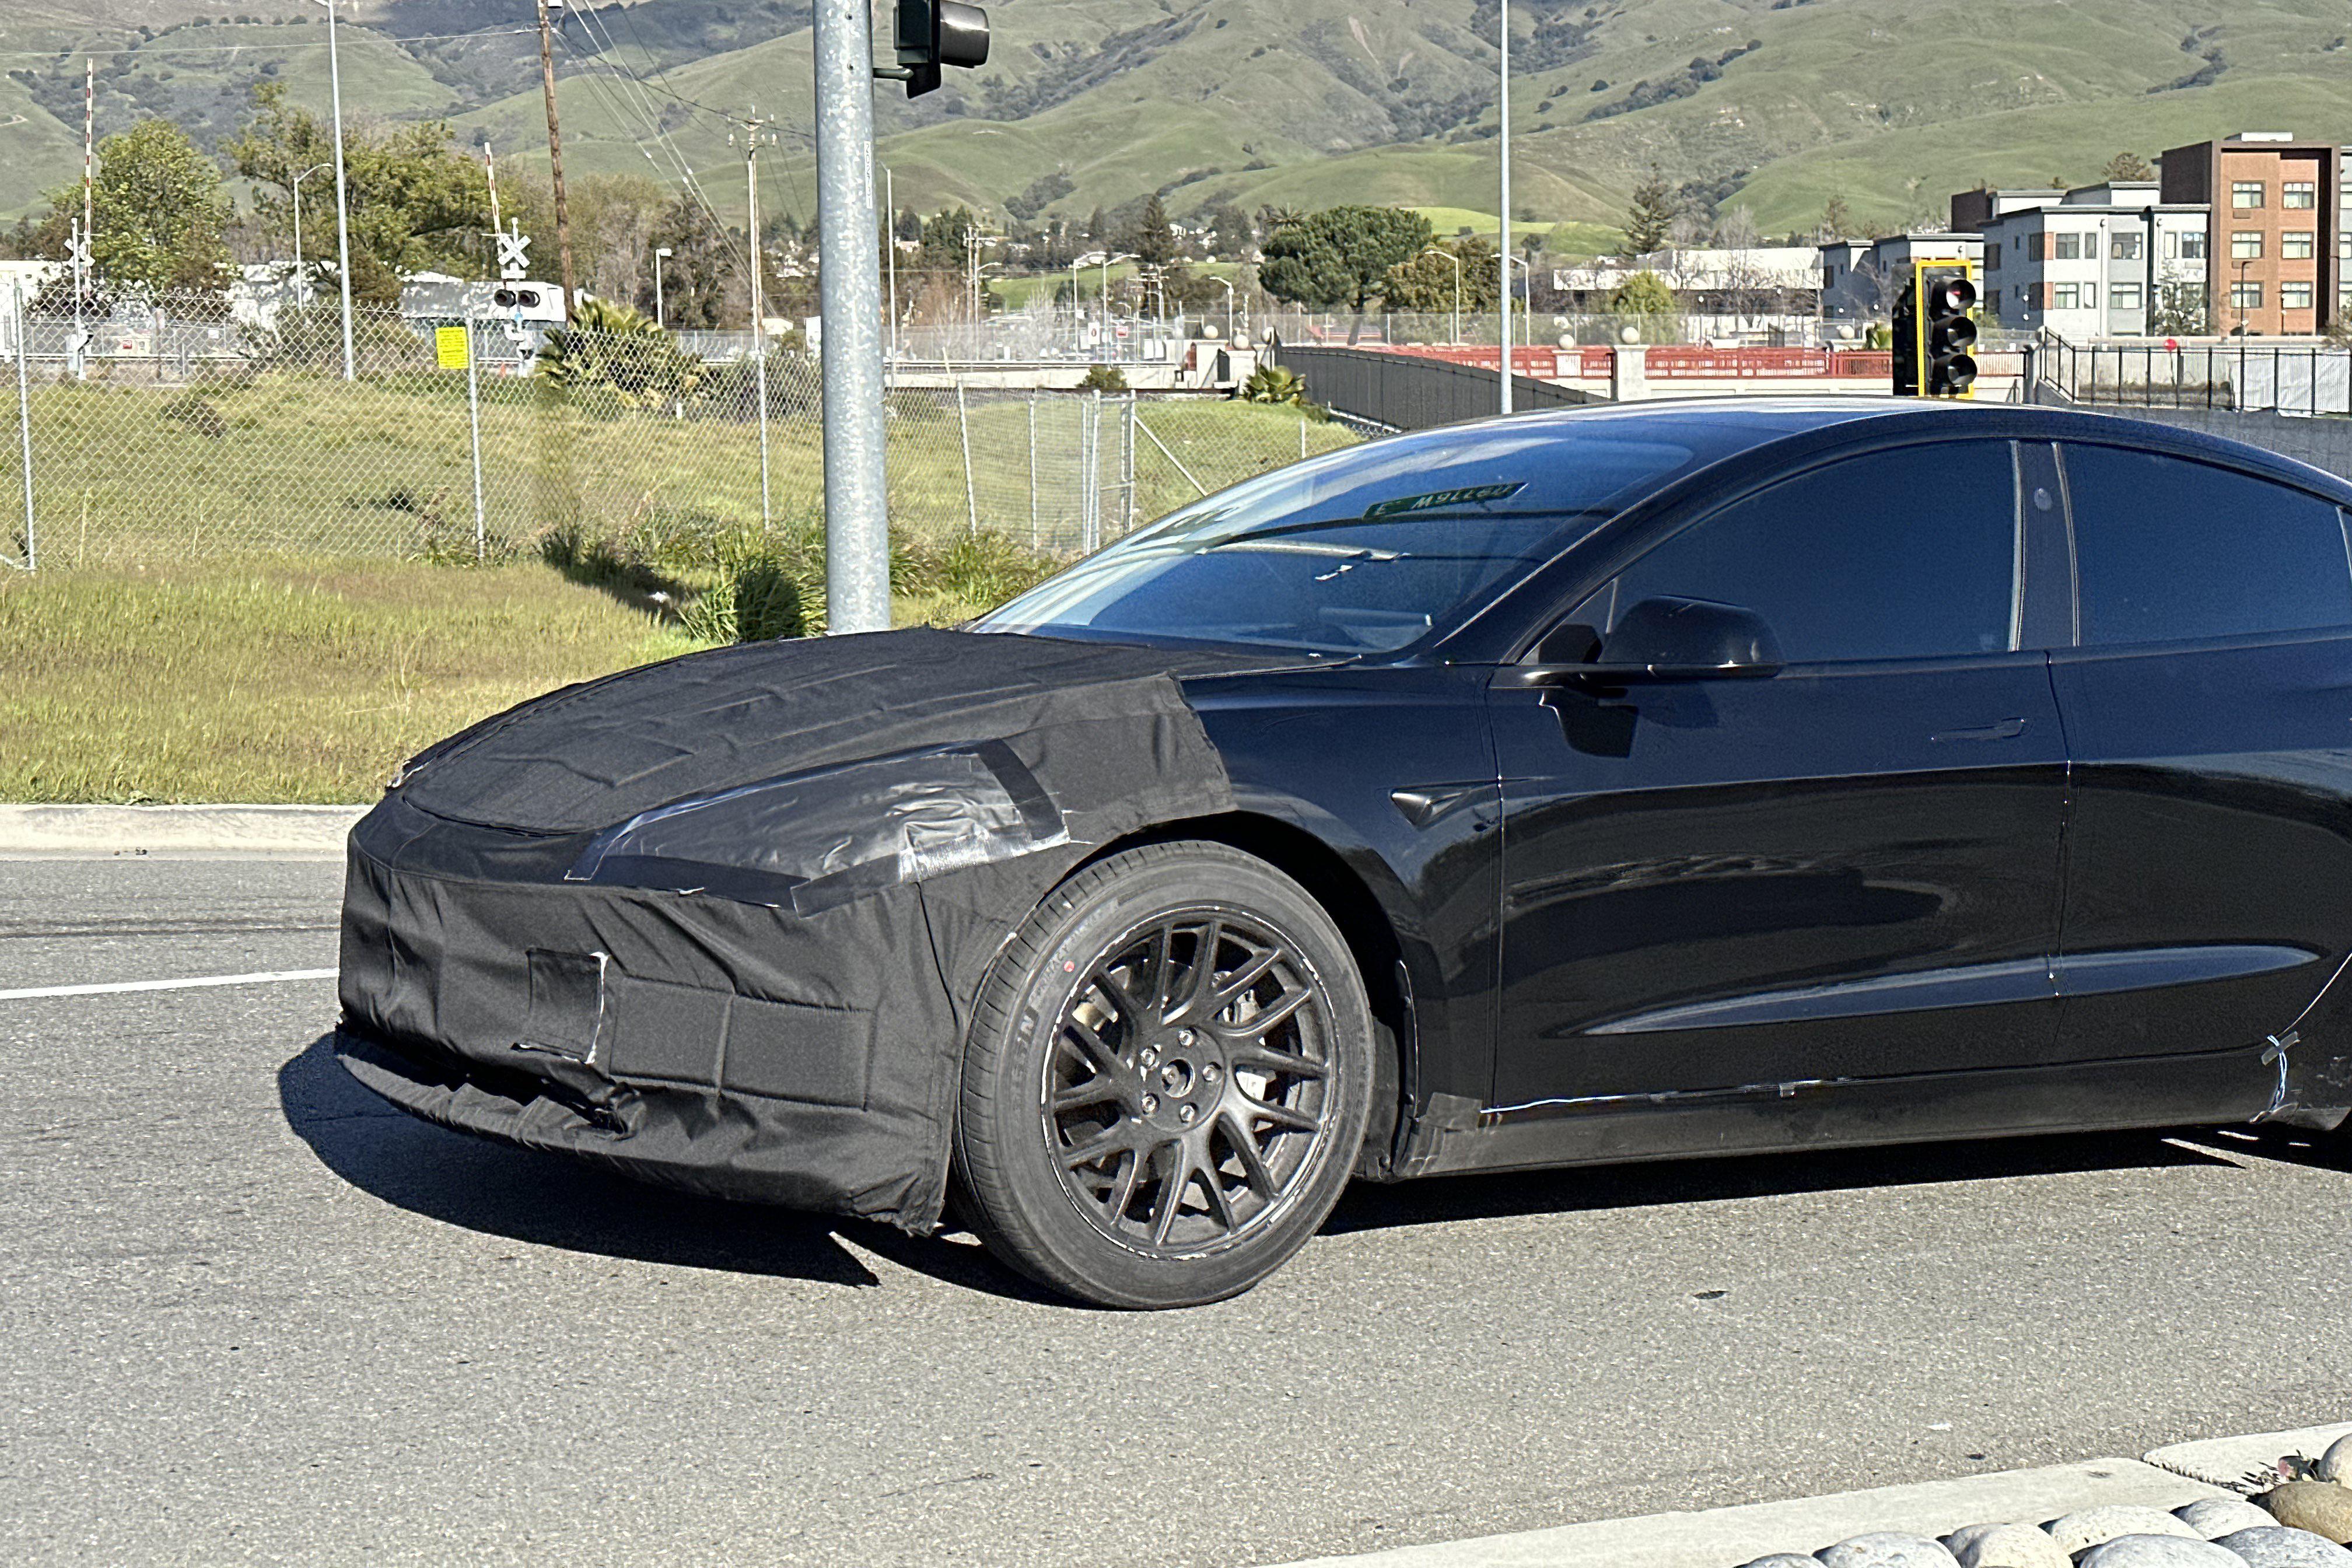 2024 Tesla Model Y facelift imagined, based on Model 3 spy photos - Drive